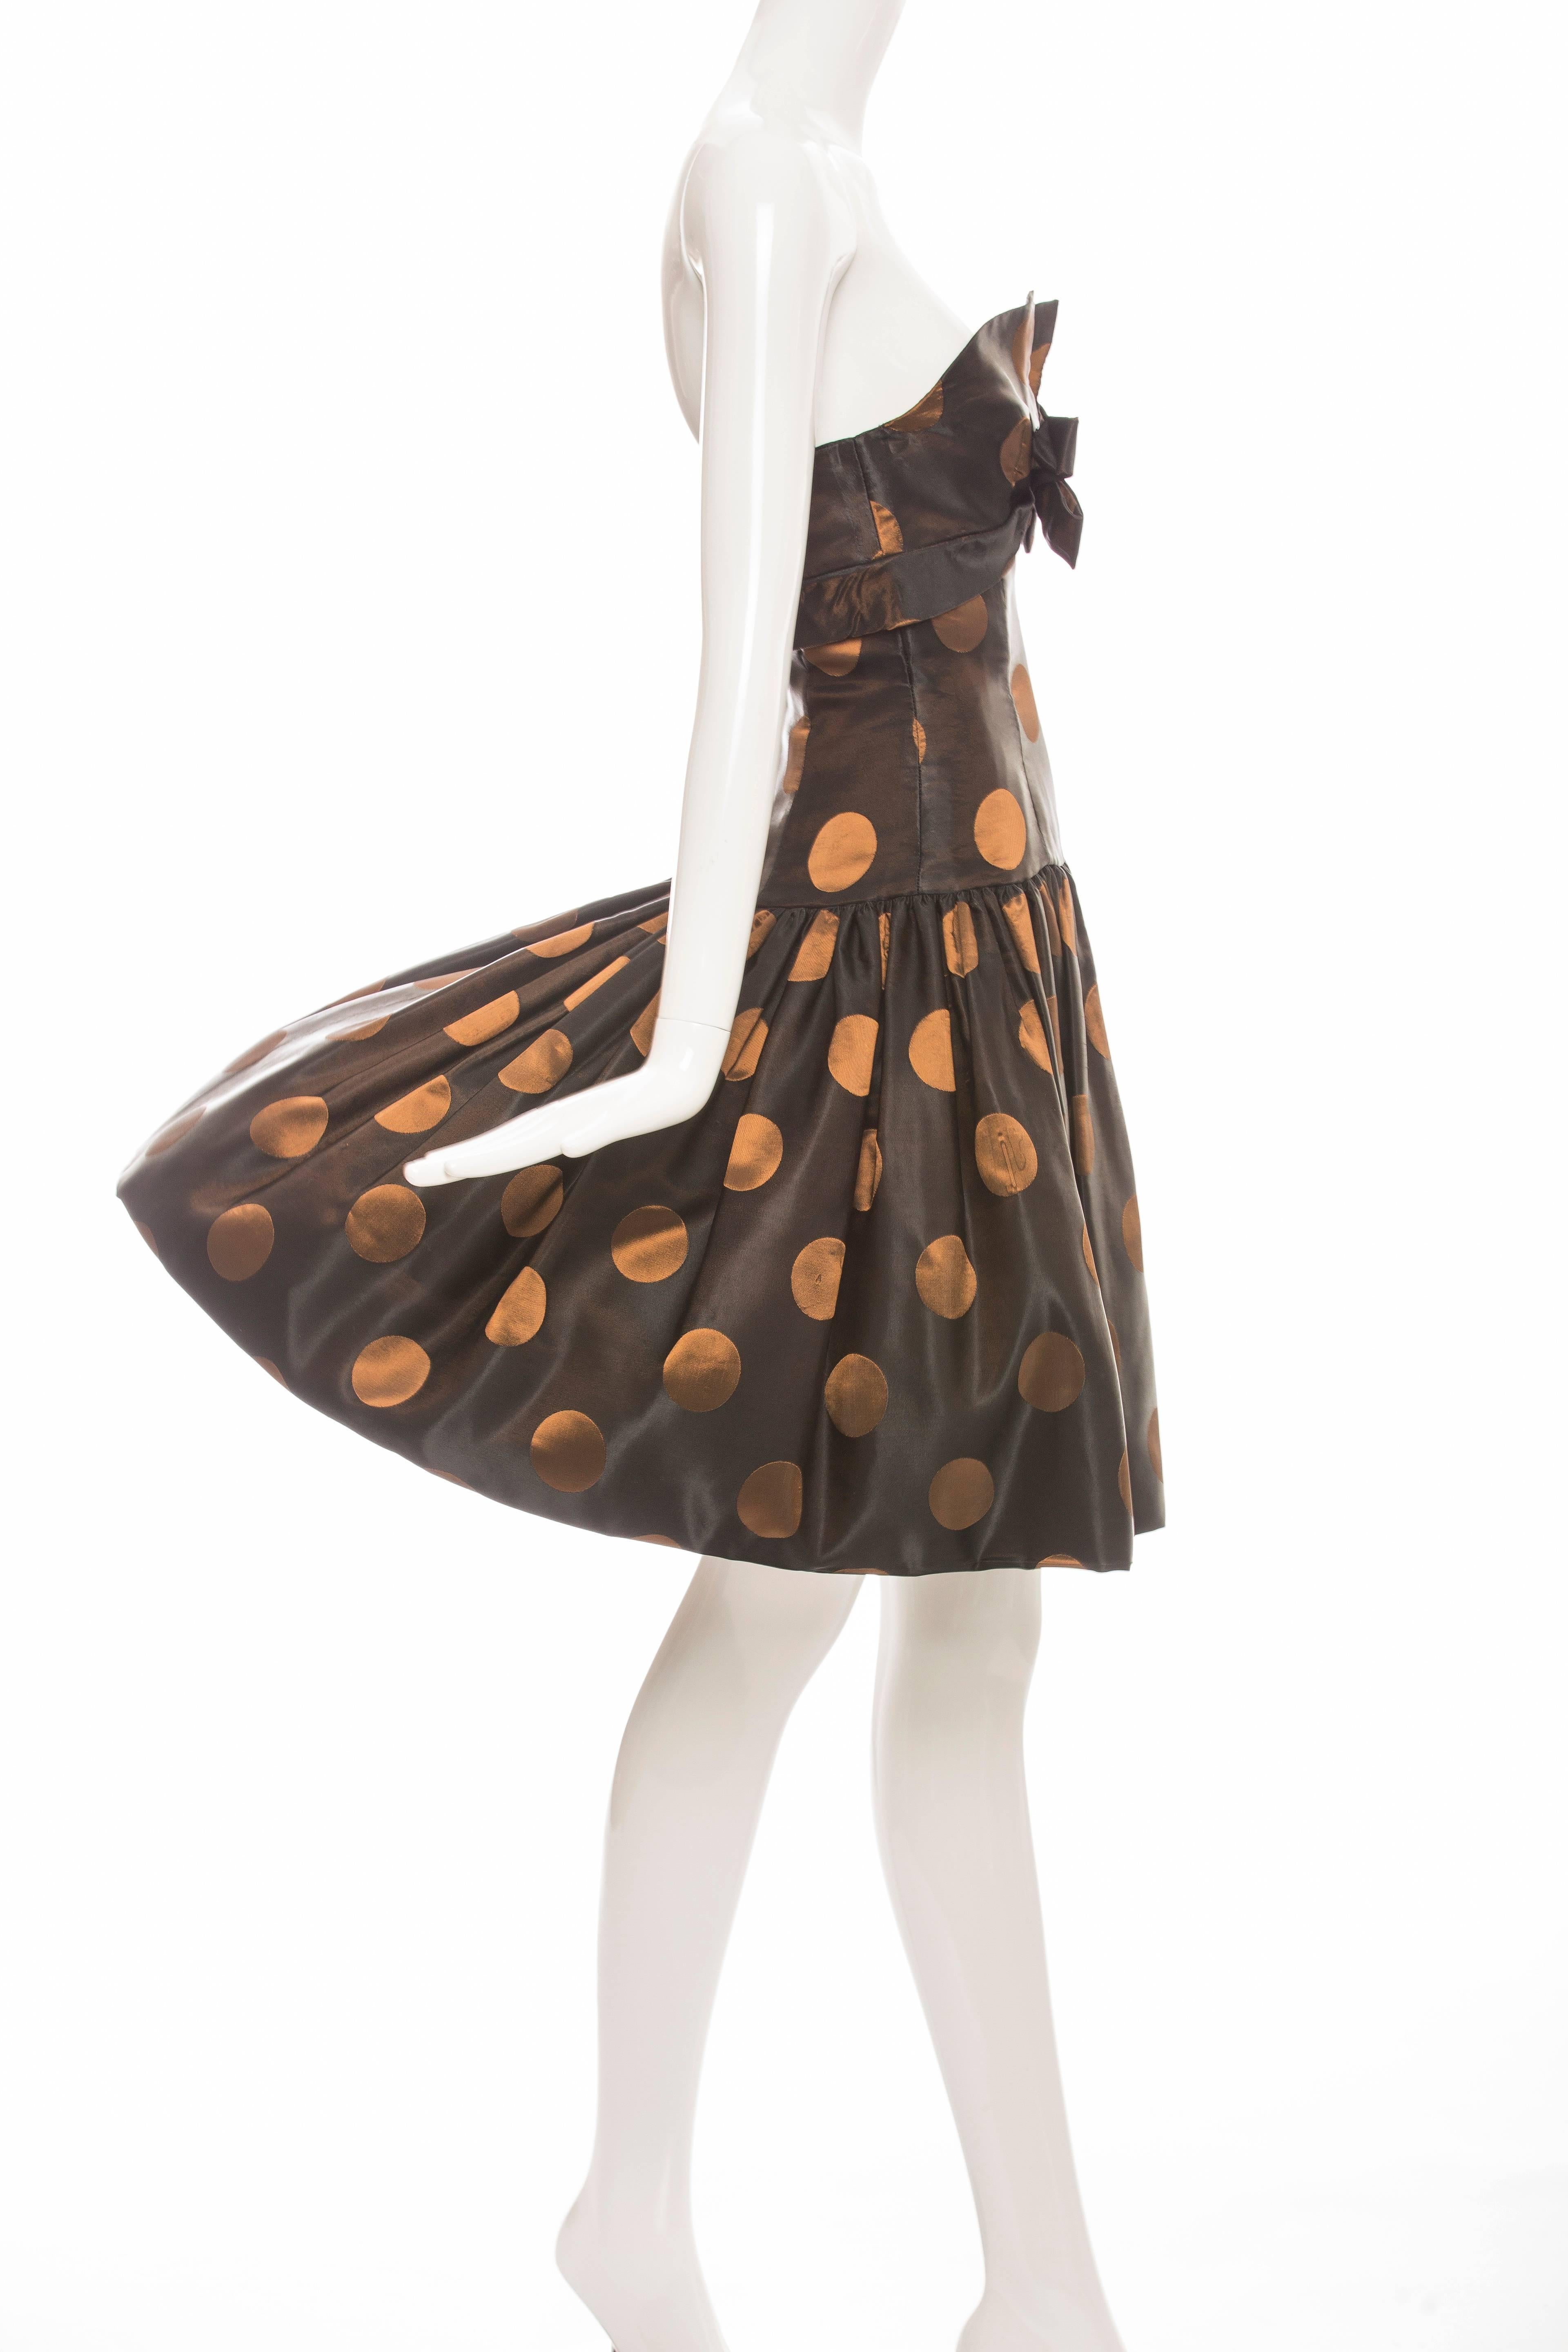 Victor Costa Strapless Black Copper Polka Dot Taffeta Party Dress, Circa 1980's For Sale 4